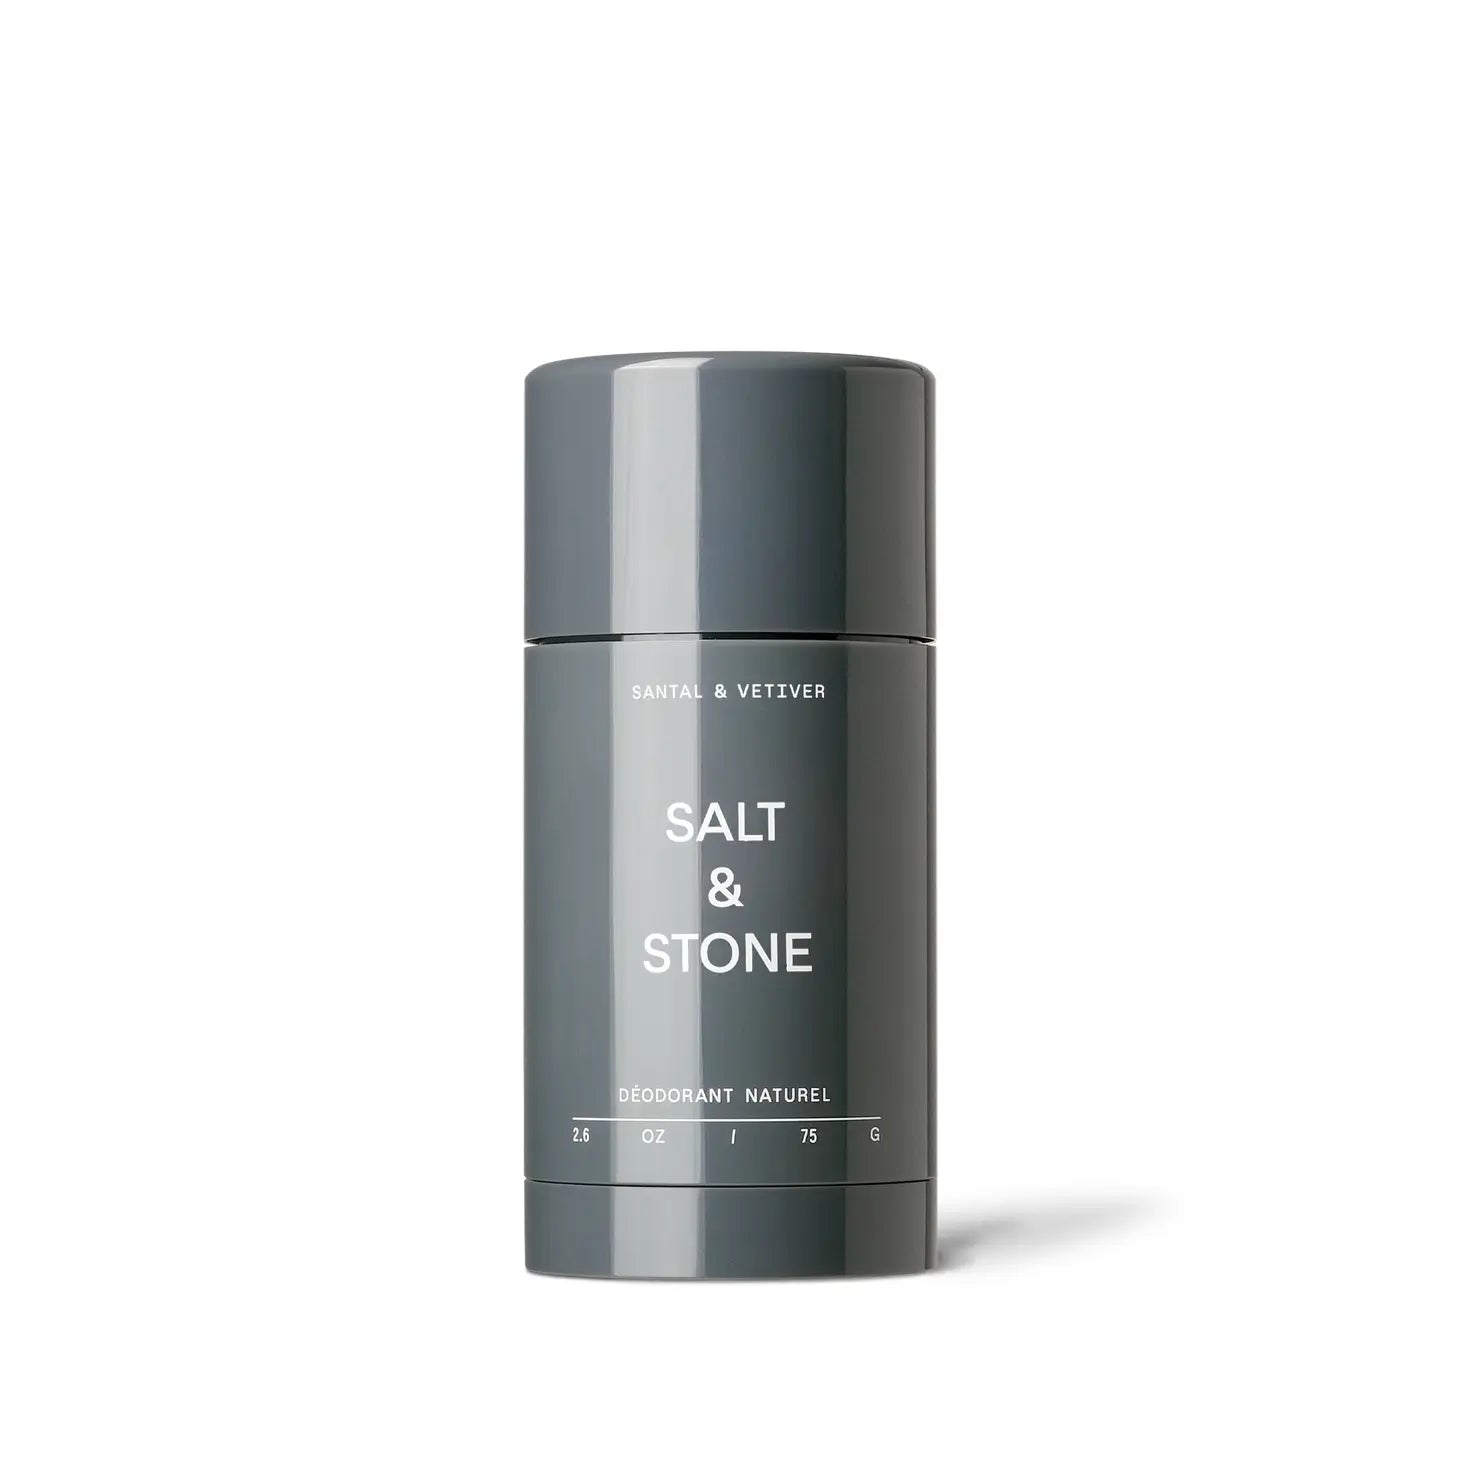 Salt & Stone Natural Deodorant Gel - Santal & Vetiver - Sensitive Skin | Prelude & Dawn | Los Angeles